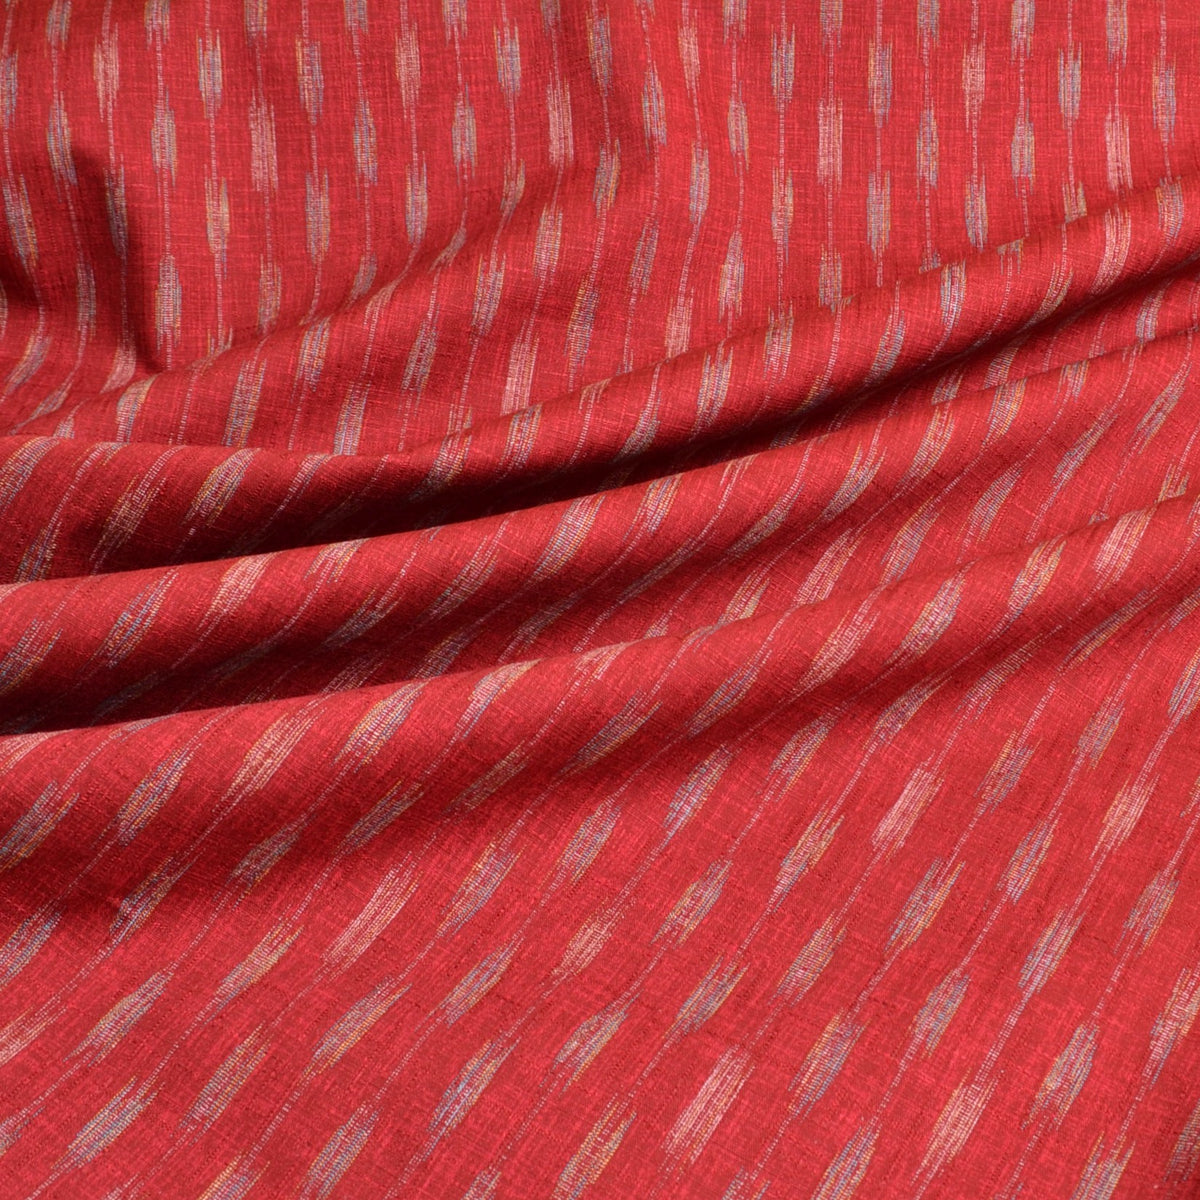 Japanese Fabrics - A Threaded Needle